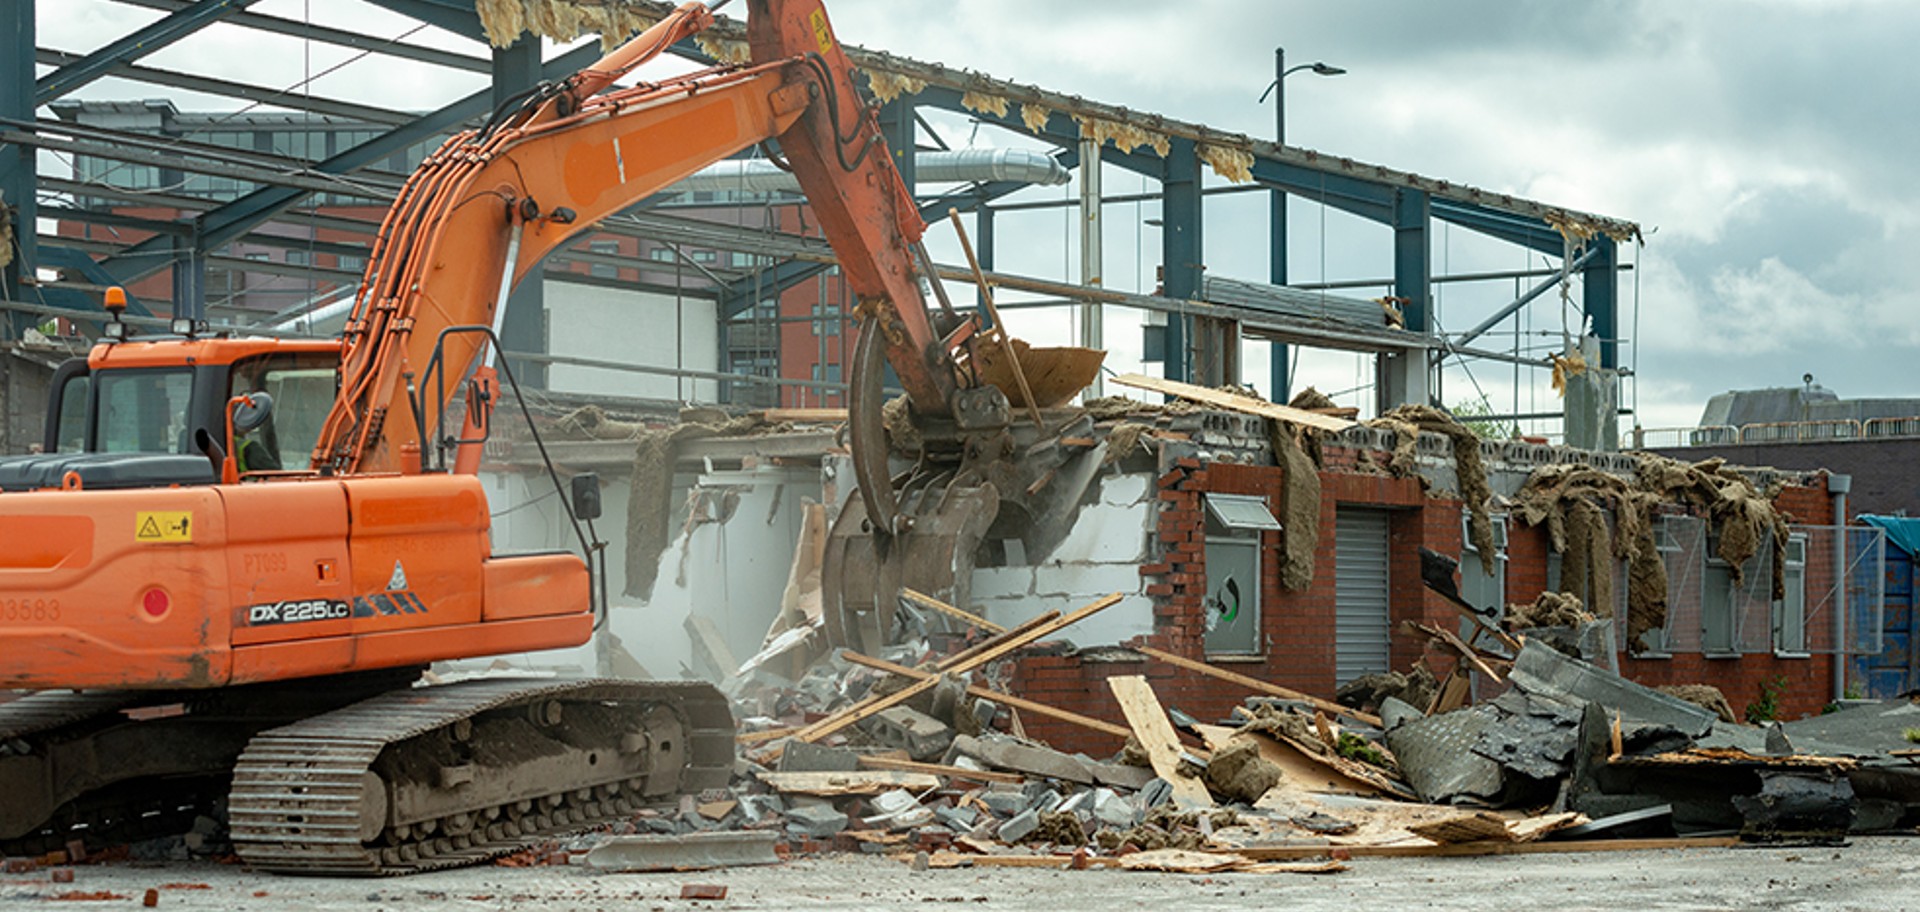 Demolition Company West London